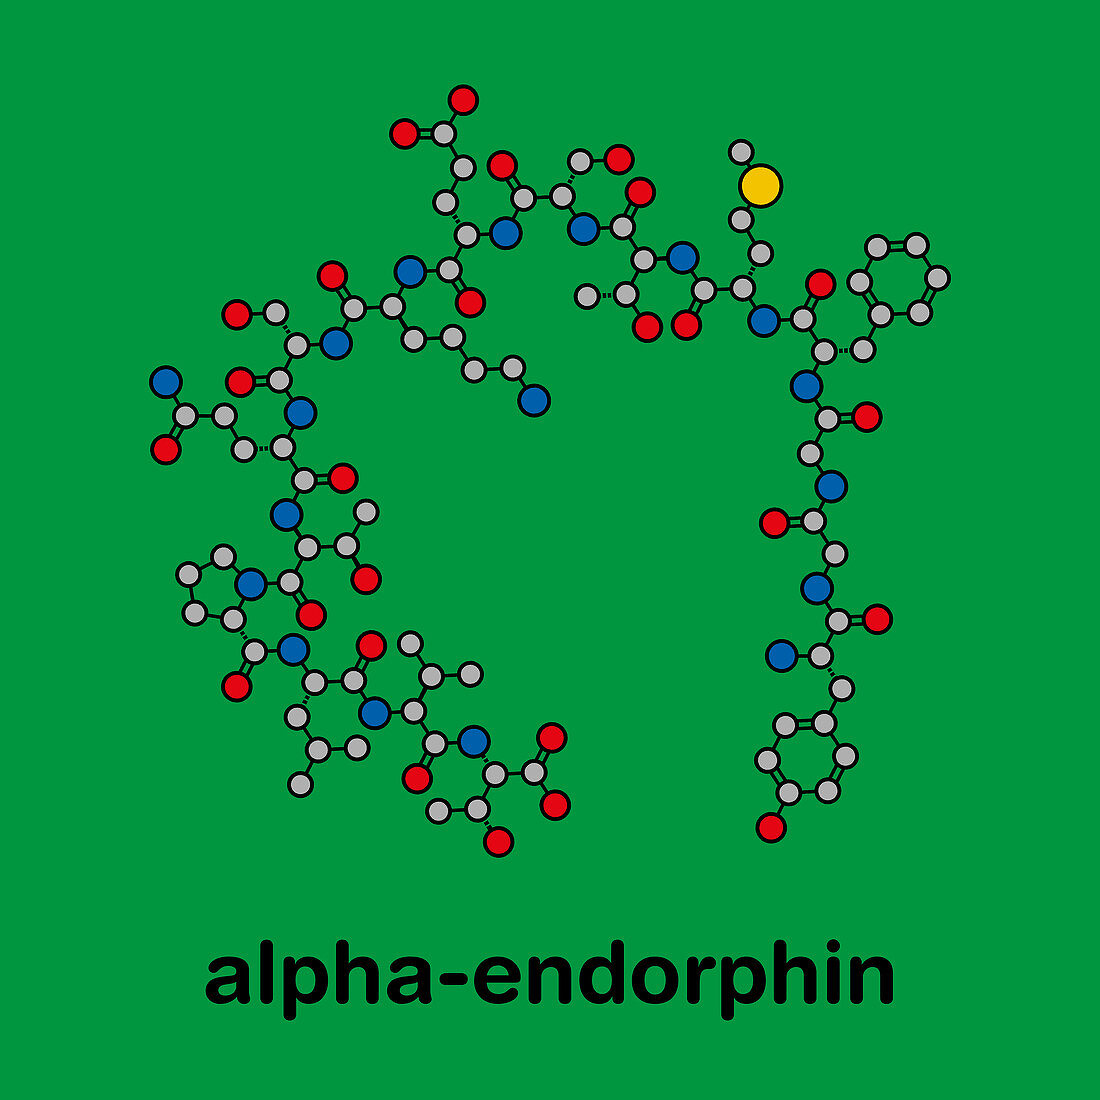 Alpha-endorphin endogenous opioid peptide molecule